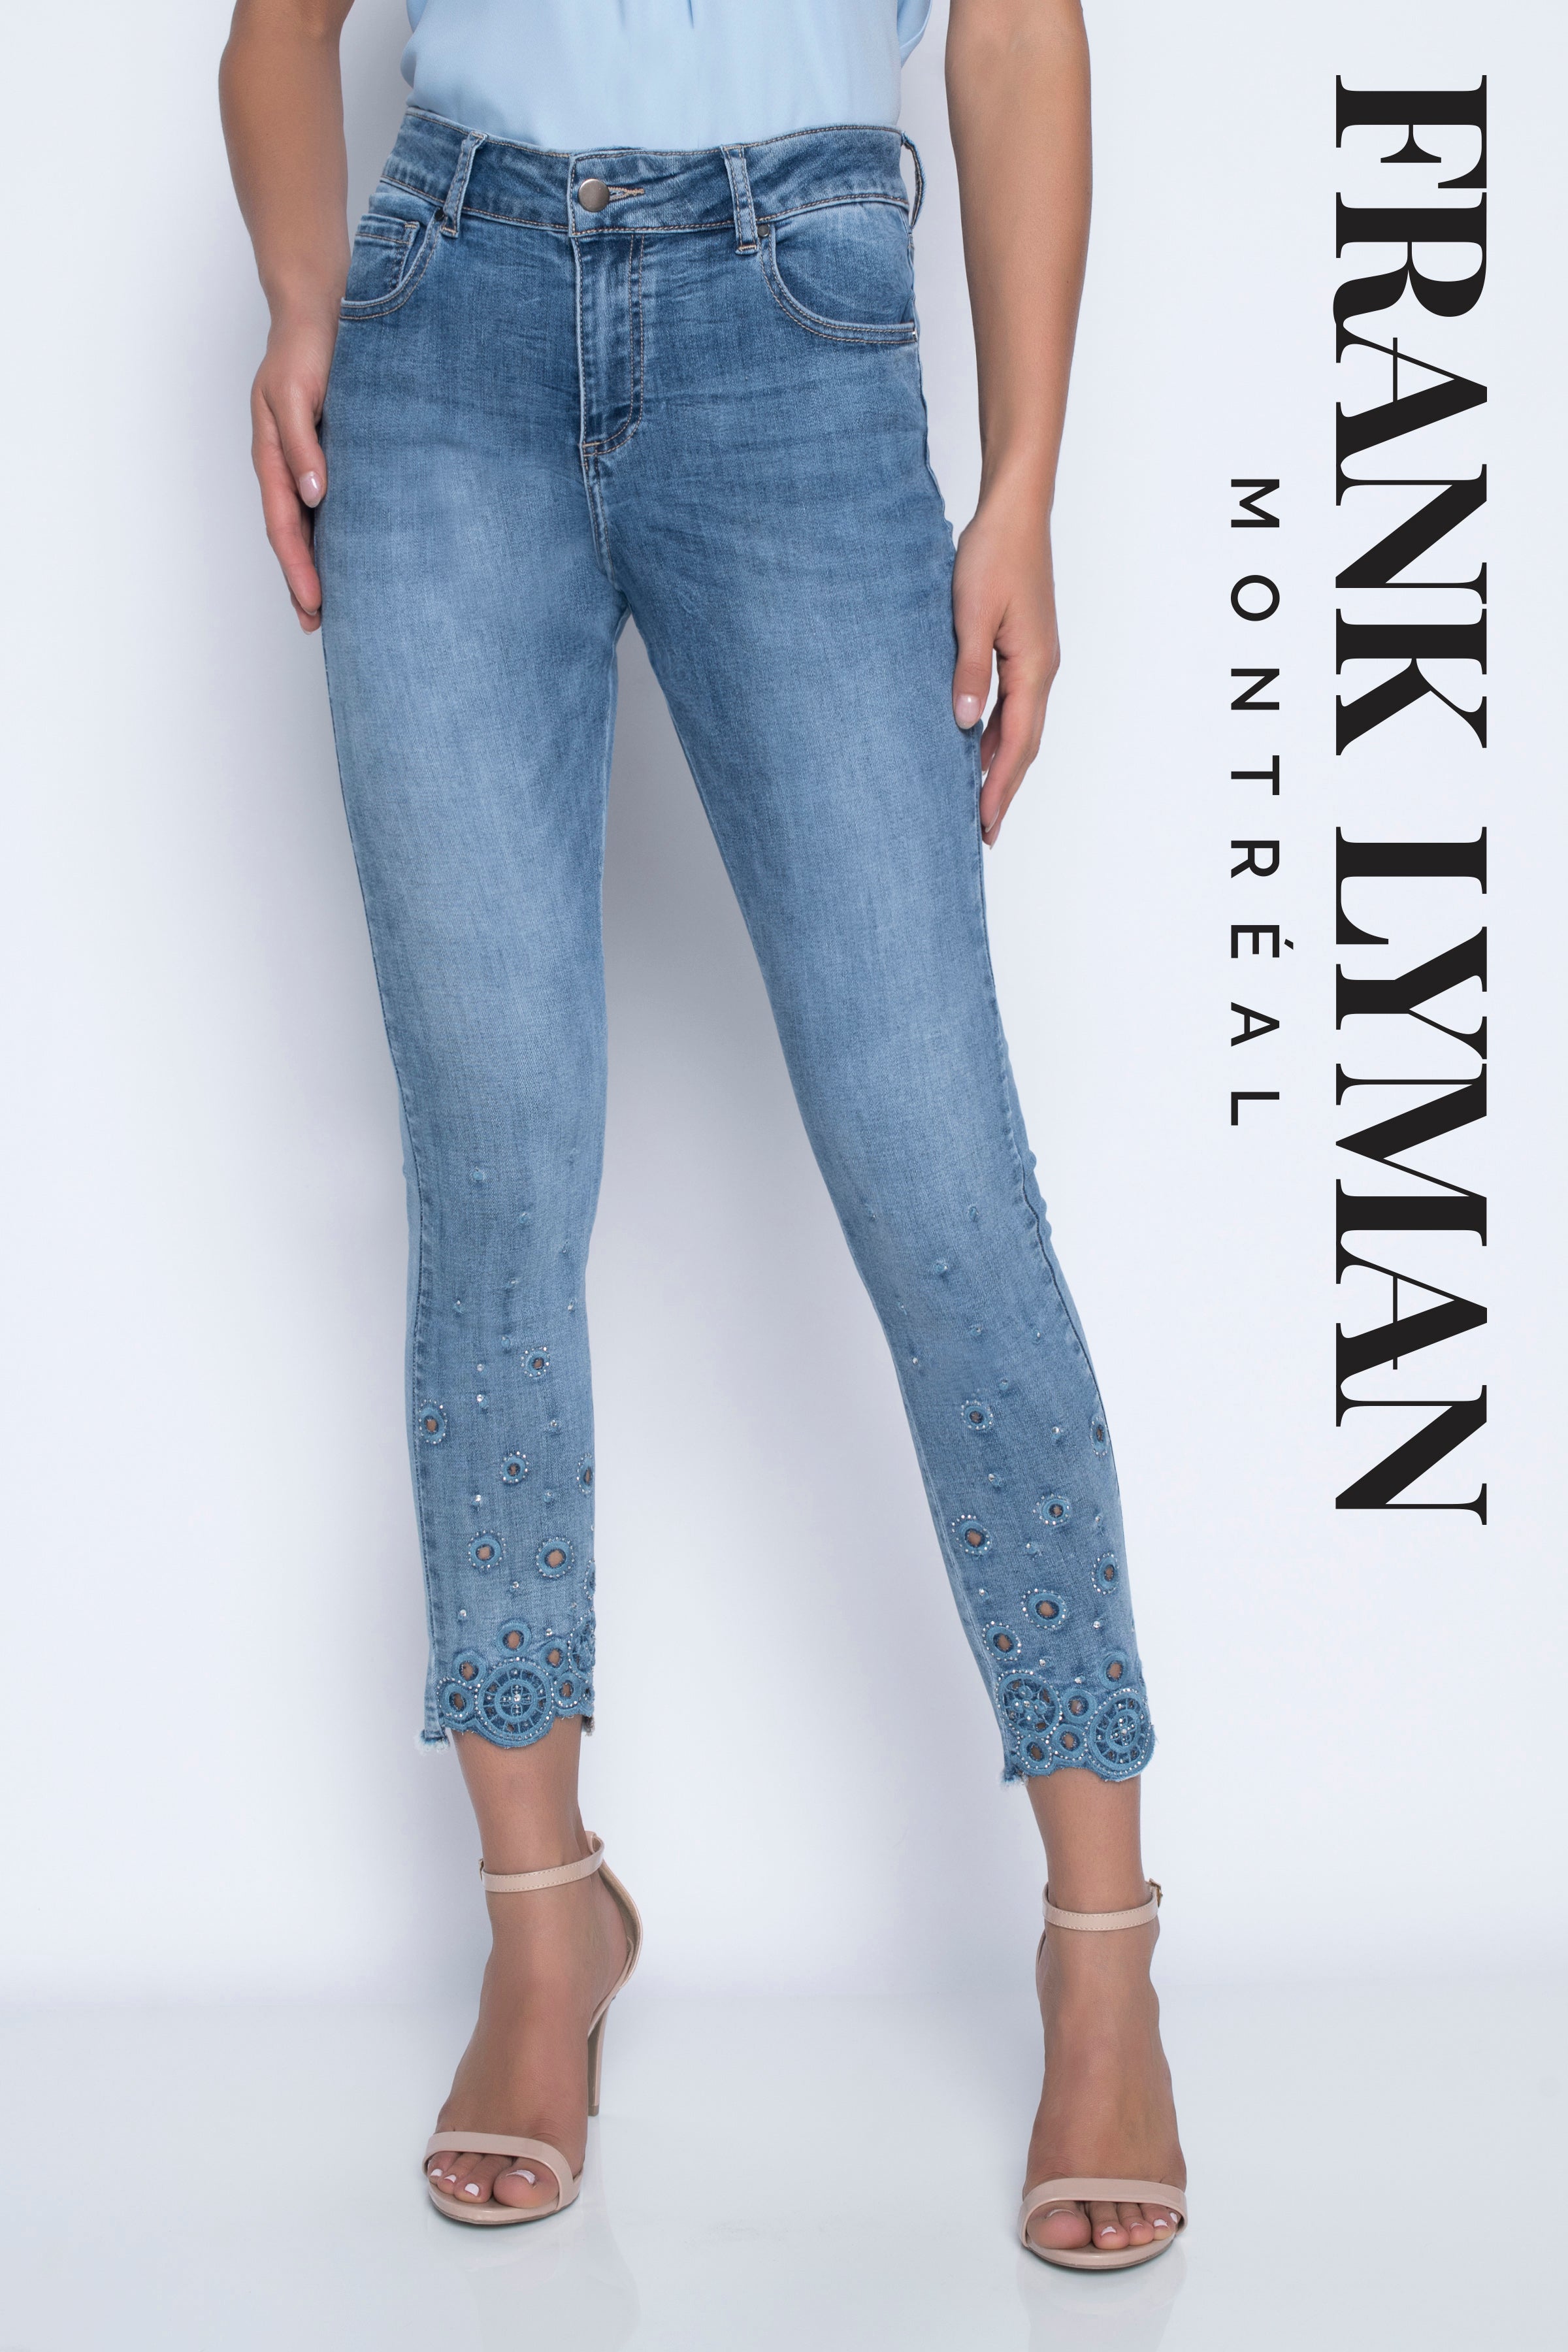 Frank Lyman Jeans-Frank Lyman Denim-Frank Lyman Jeans Online